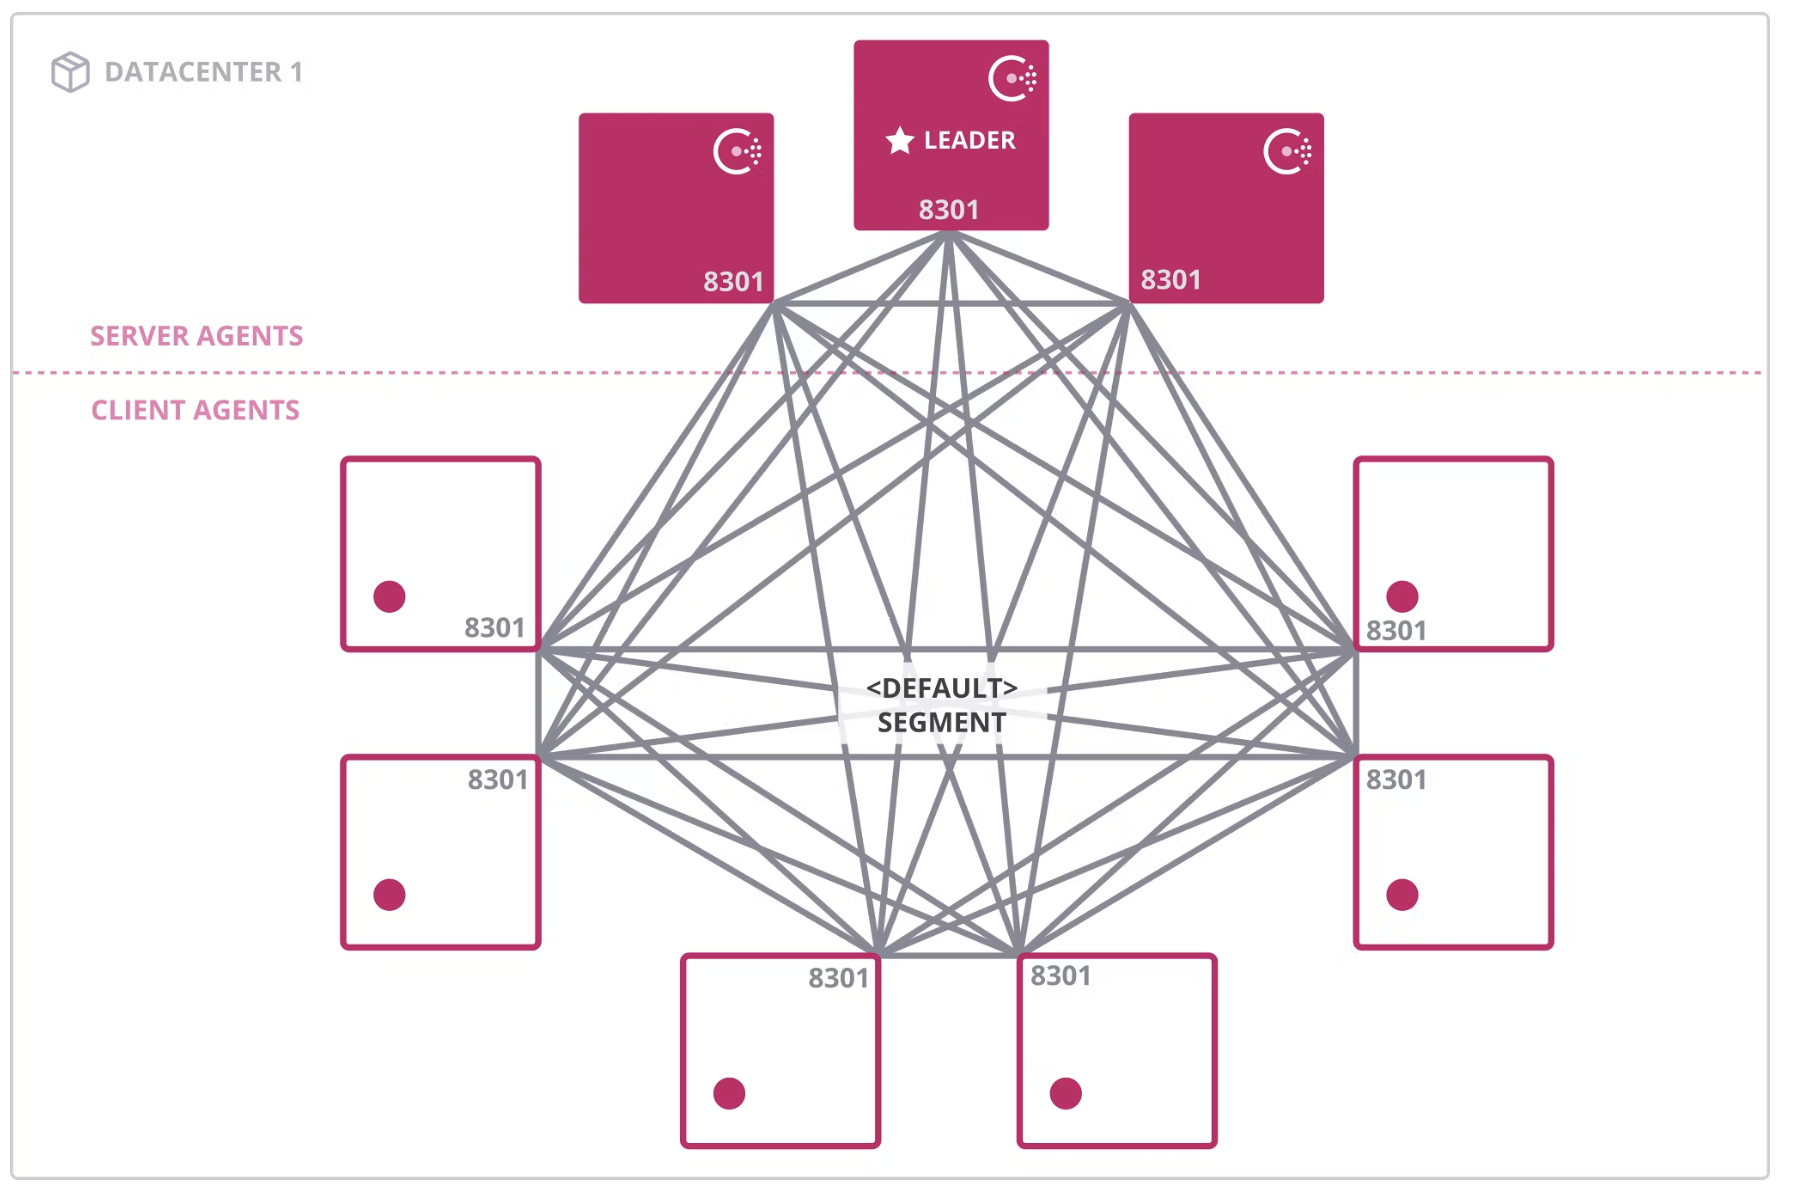 This diagram shows the <default> network segment